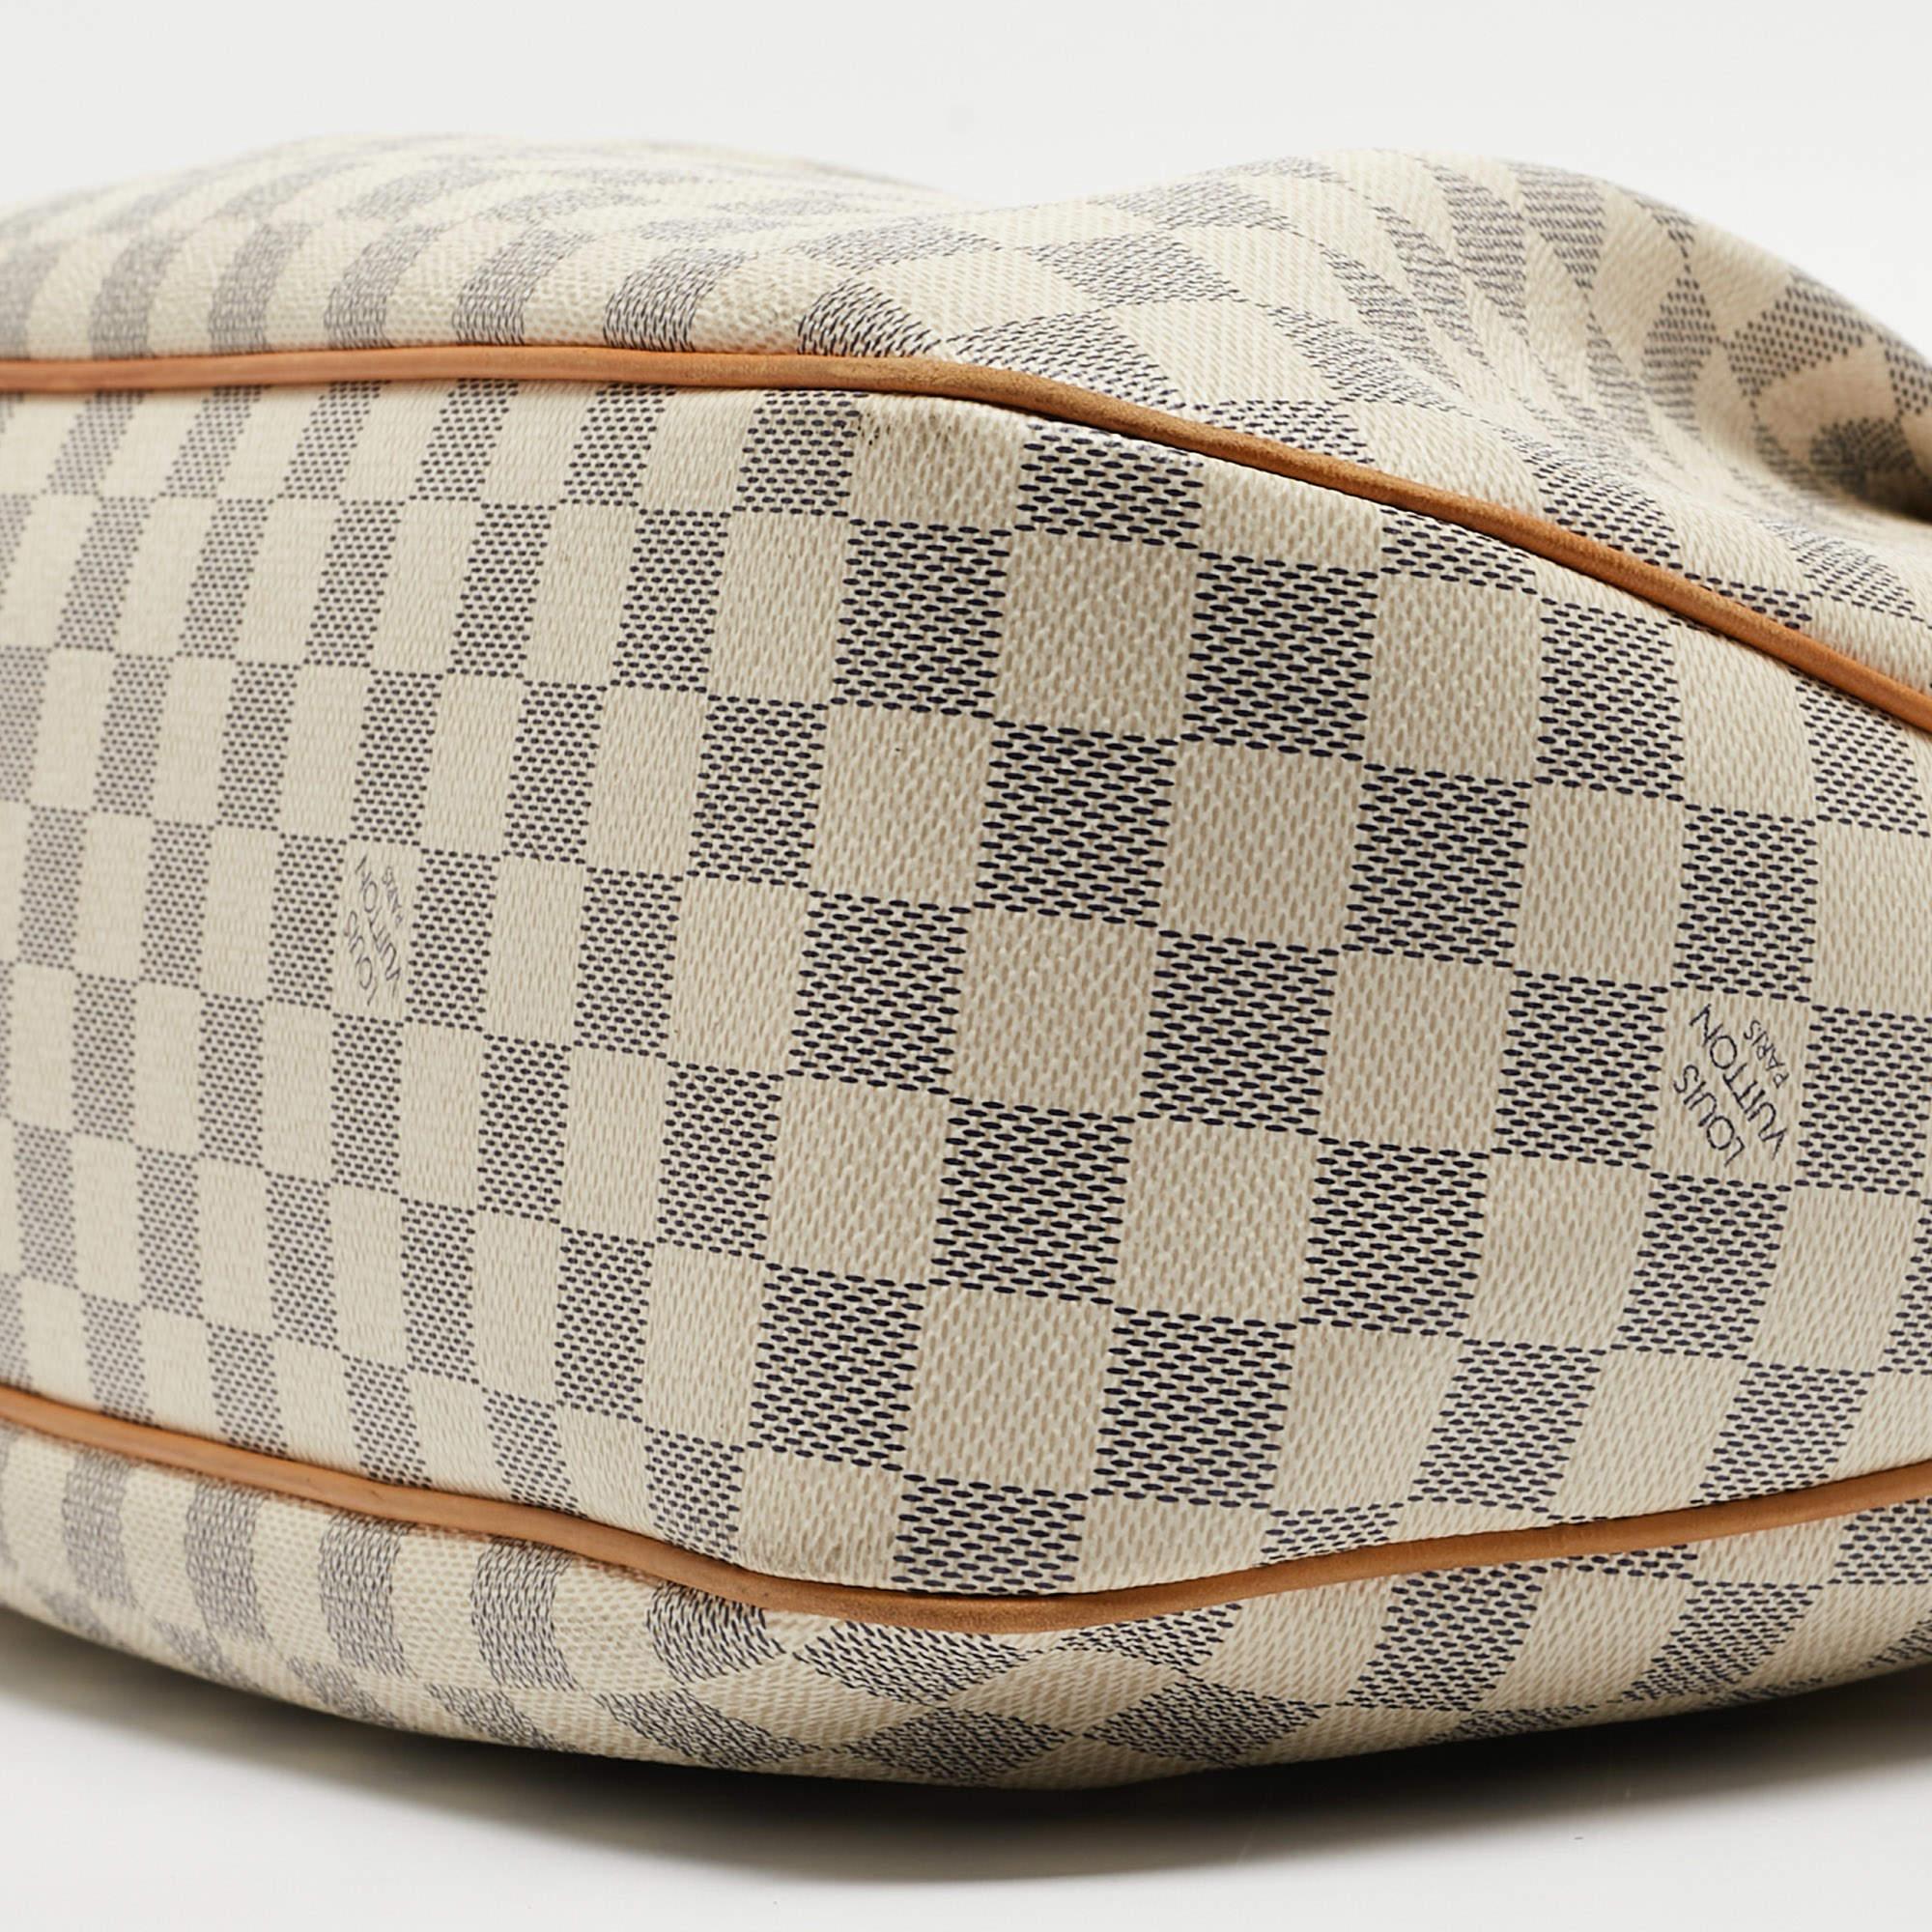 Louis Vuitton Damier Azur Canvas Siracusa MM Bag In Good Condition For Sale In Dubai, Al Qouz 2